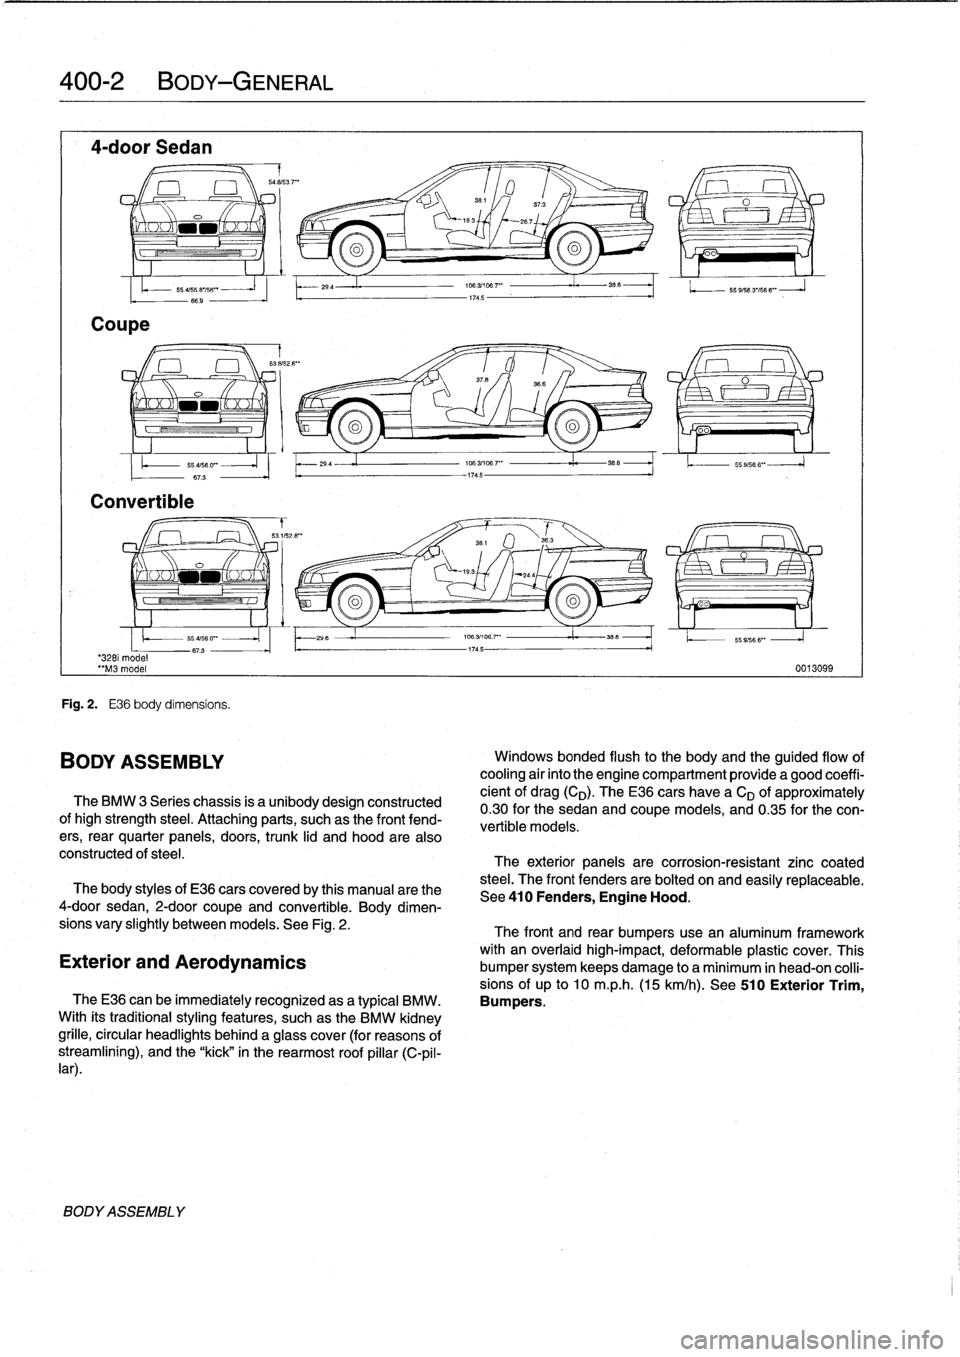 BMW 325i 1998 E36 Workshop Manual 
400-2
BODY-GENERAL

4-door
Sedan

Coupe

-
saas3
.7""

351
/

	

37
.3
O

	

I
x
`-193

	

267

o
oa

3281
model
"M3
model

Convertible

BODYASSEMBLY

55
ass
.e
iss
""
-
66
.9
-

Fig
.
2
.

	

E36
b